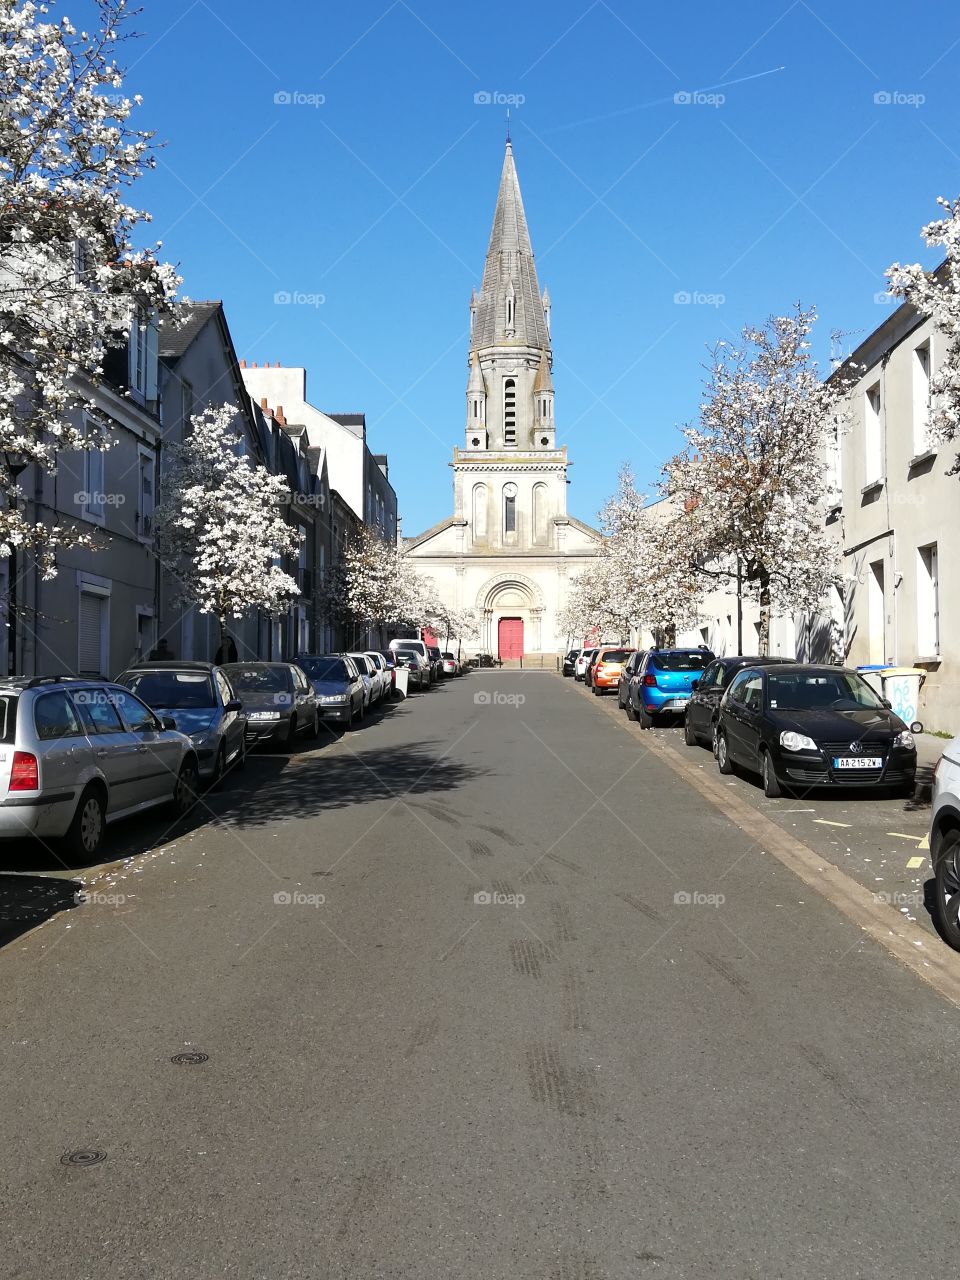 Blossom, St Claire church, Nantes